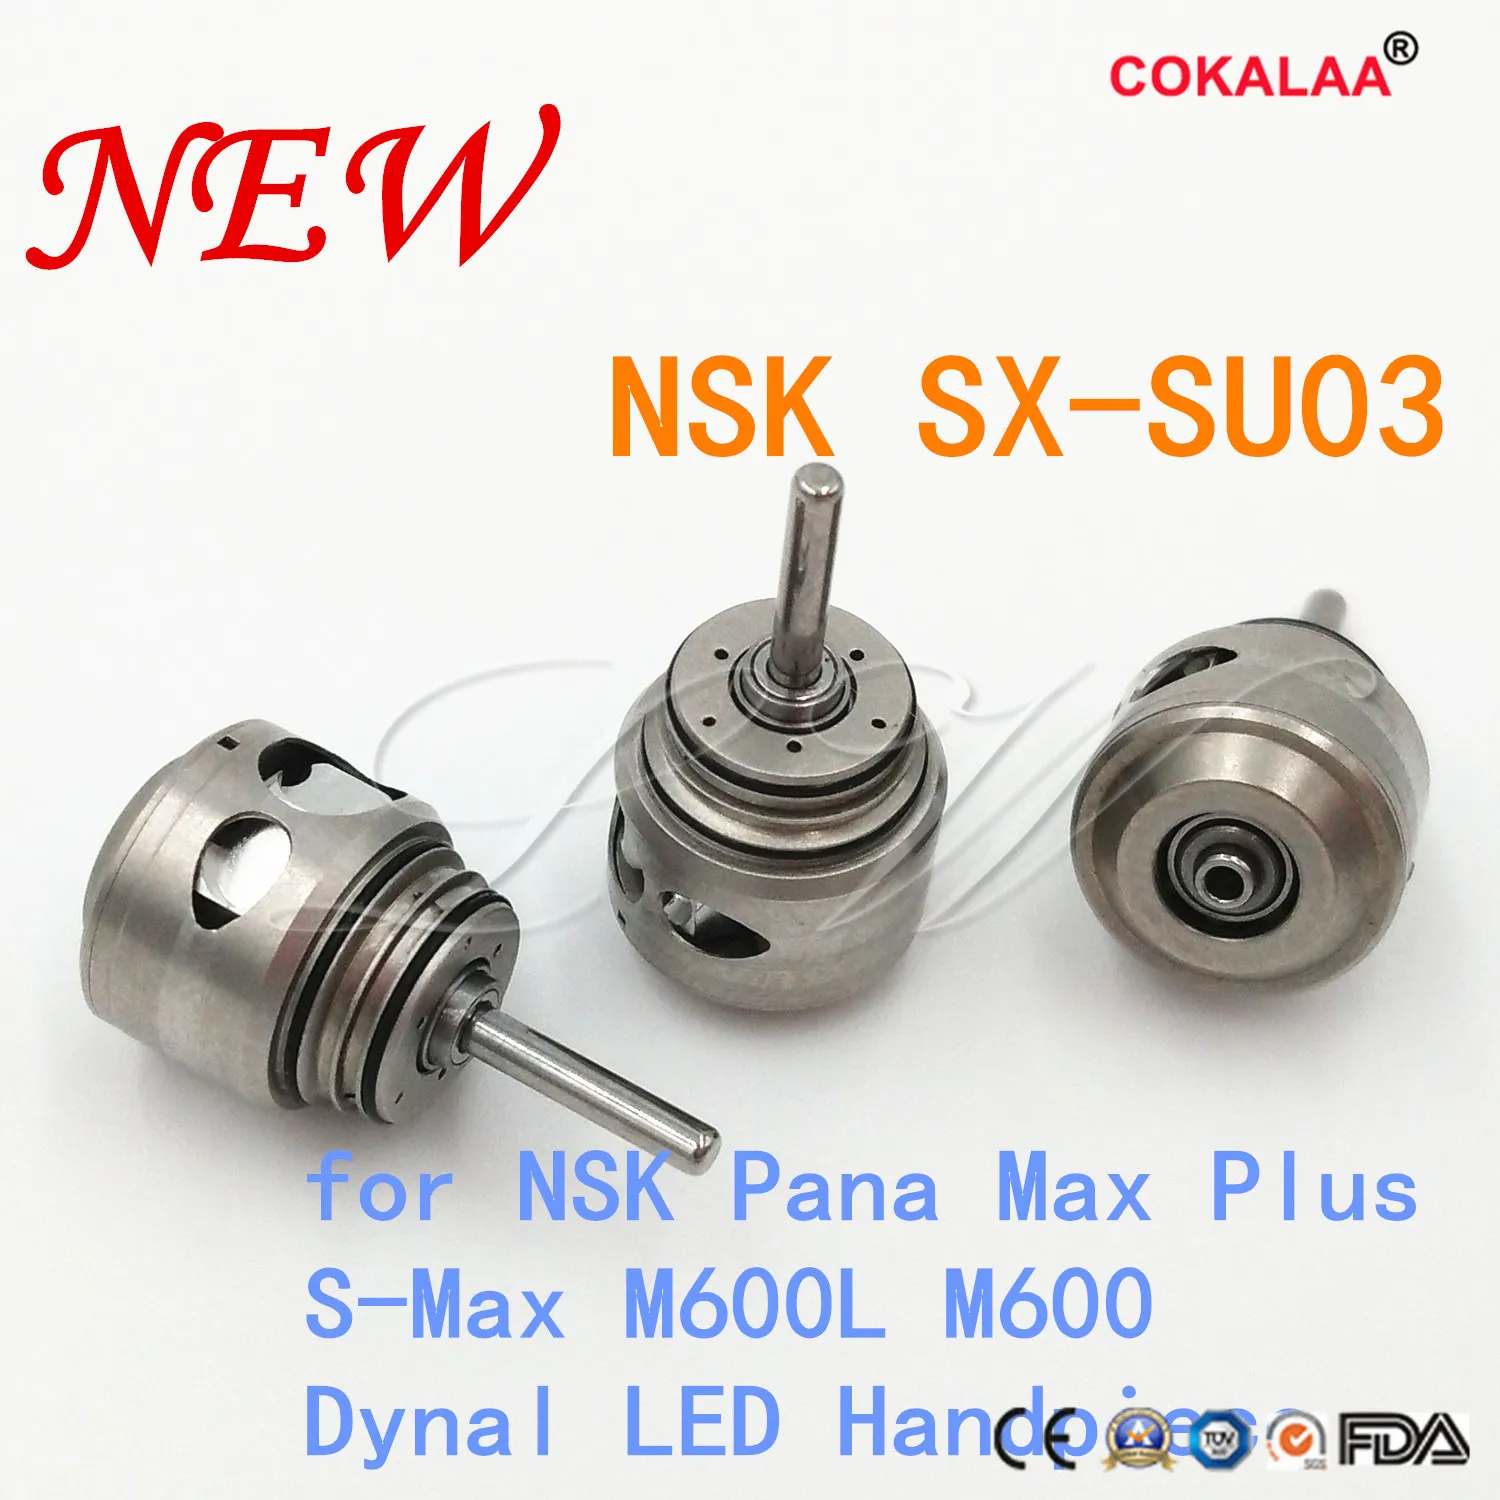 Cartucho de turbina Dental NSK SX-SU03 para Pana Max Plus-S Max M600L Dynal LED, 1 unidad